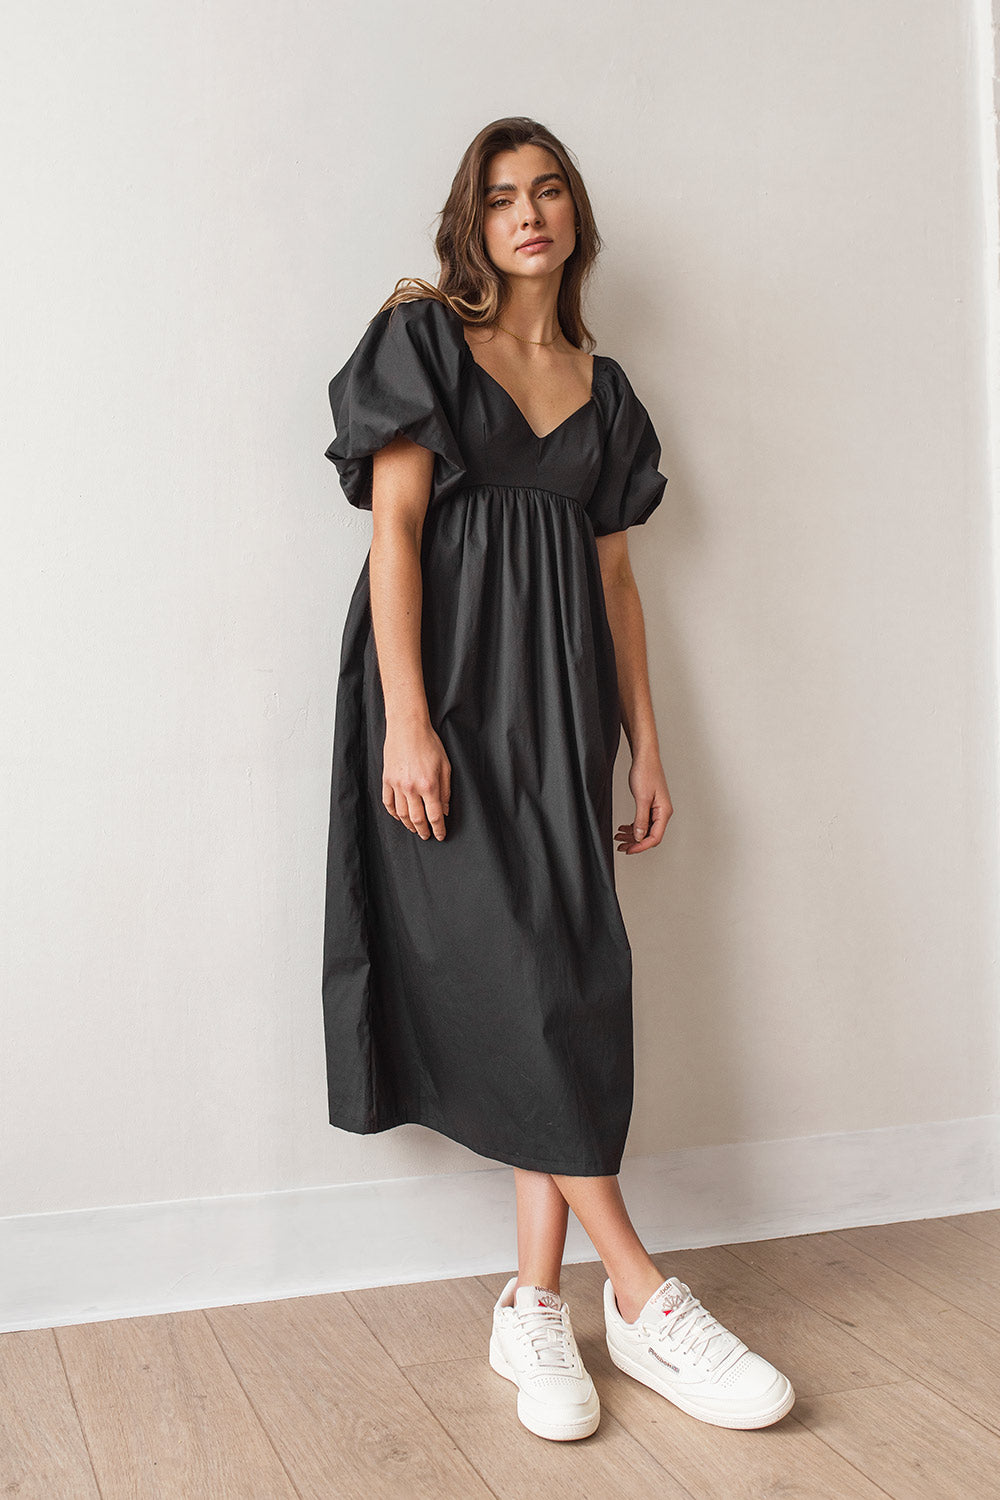 Florre Black | Short Sleeve Empire Waist Midi Dress on model